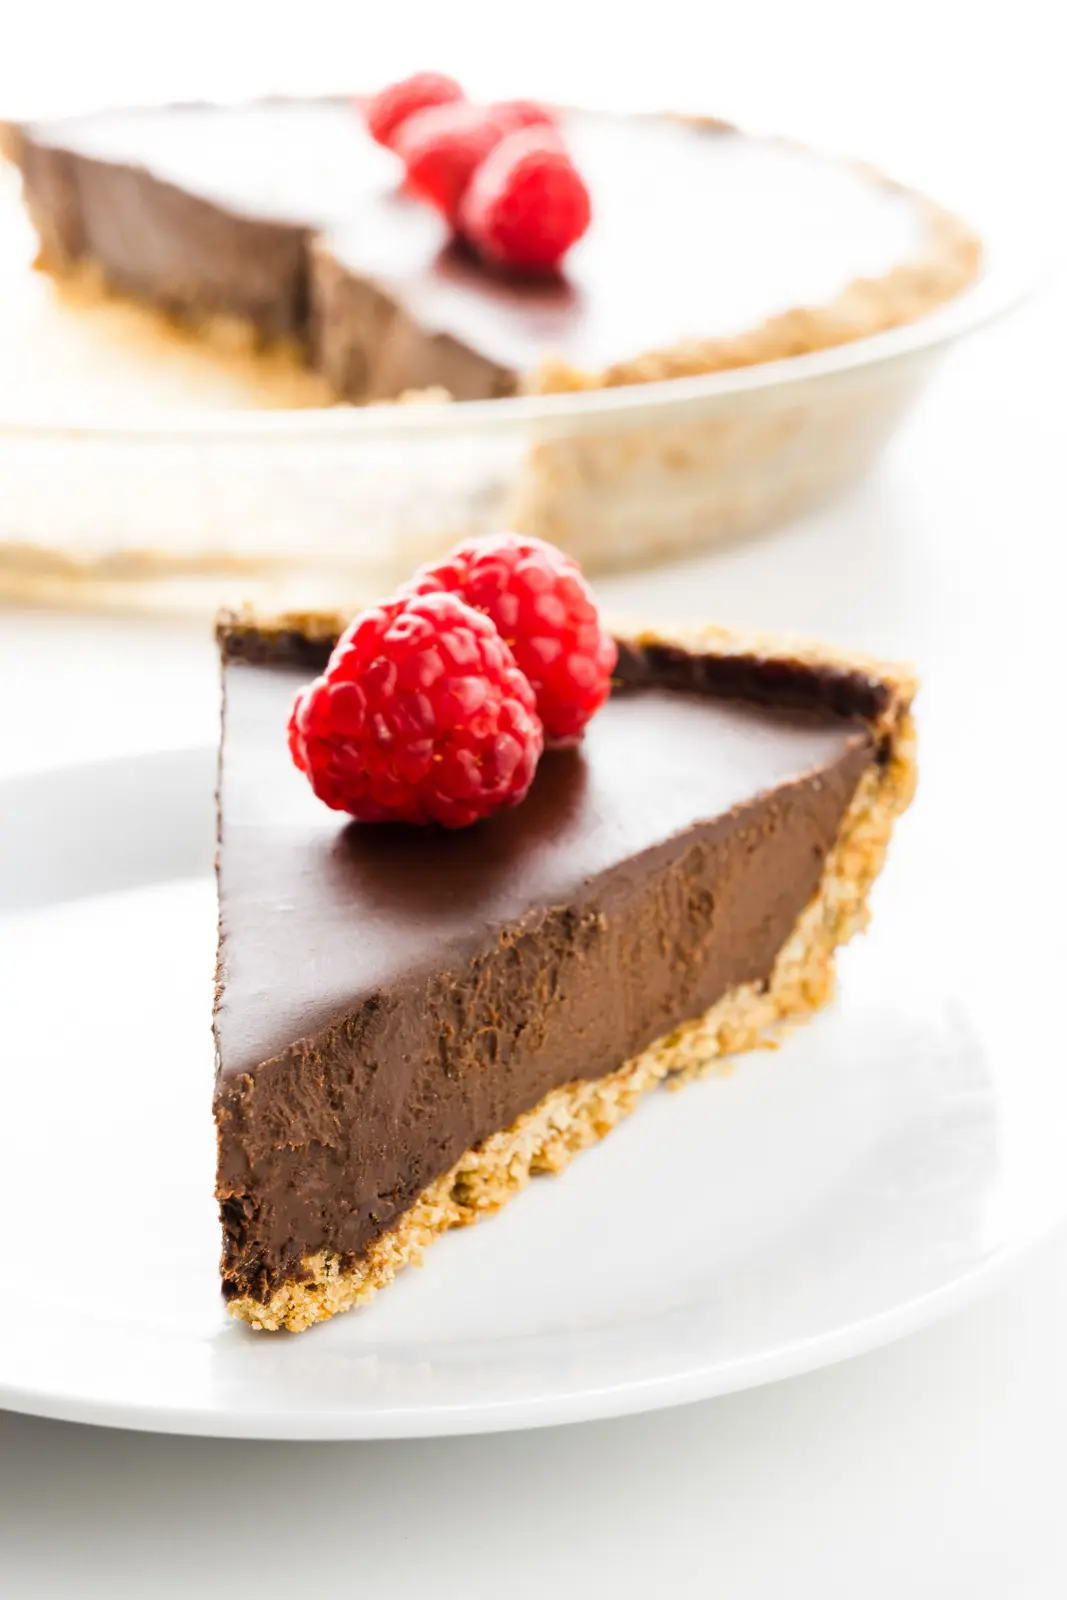 A slice of dark chocolate pie has raspberries on top. The rest of the pie is behind it.